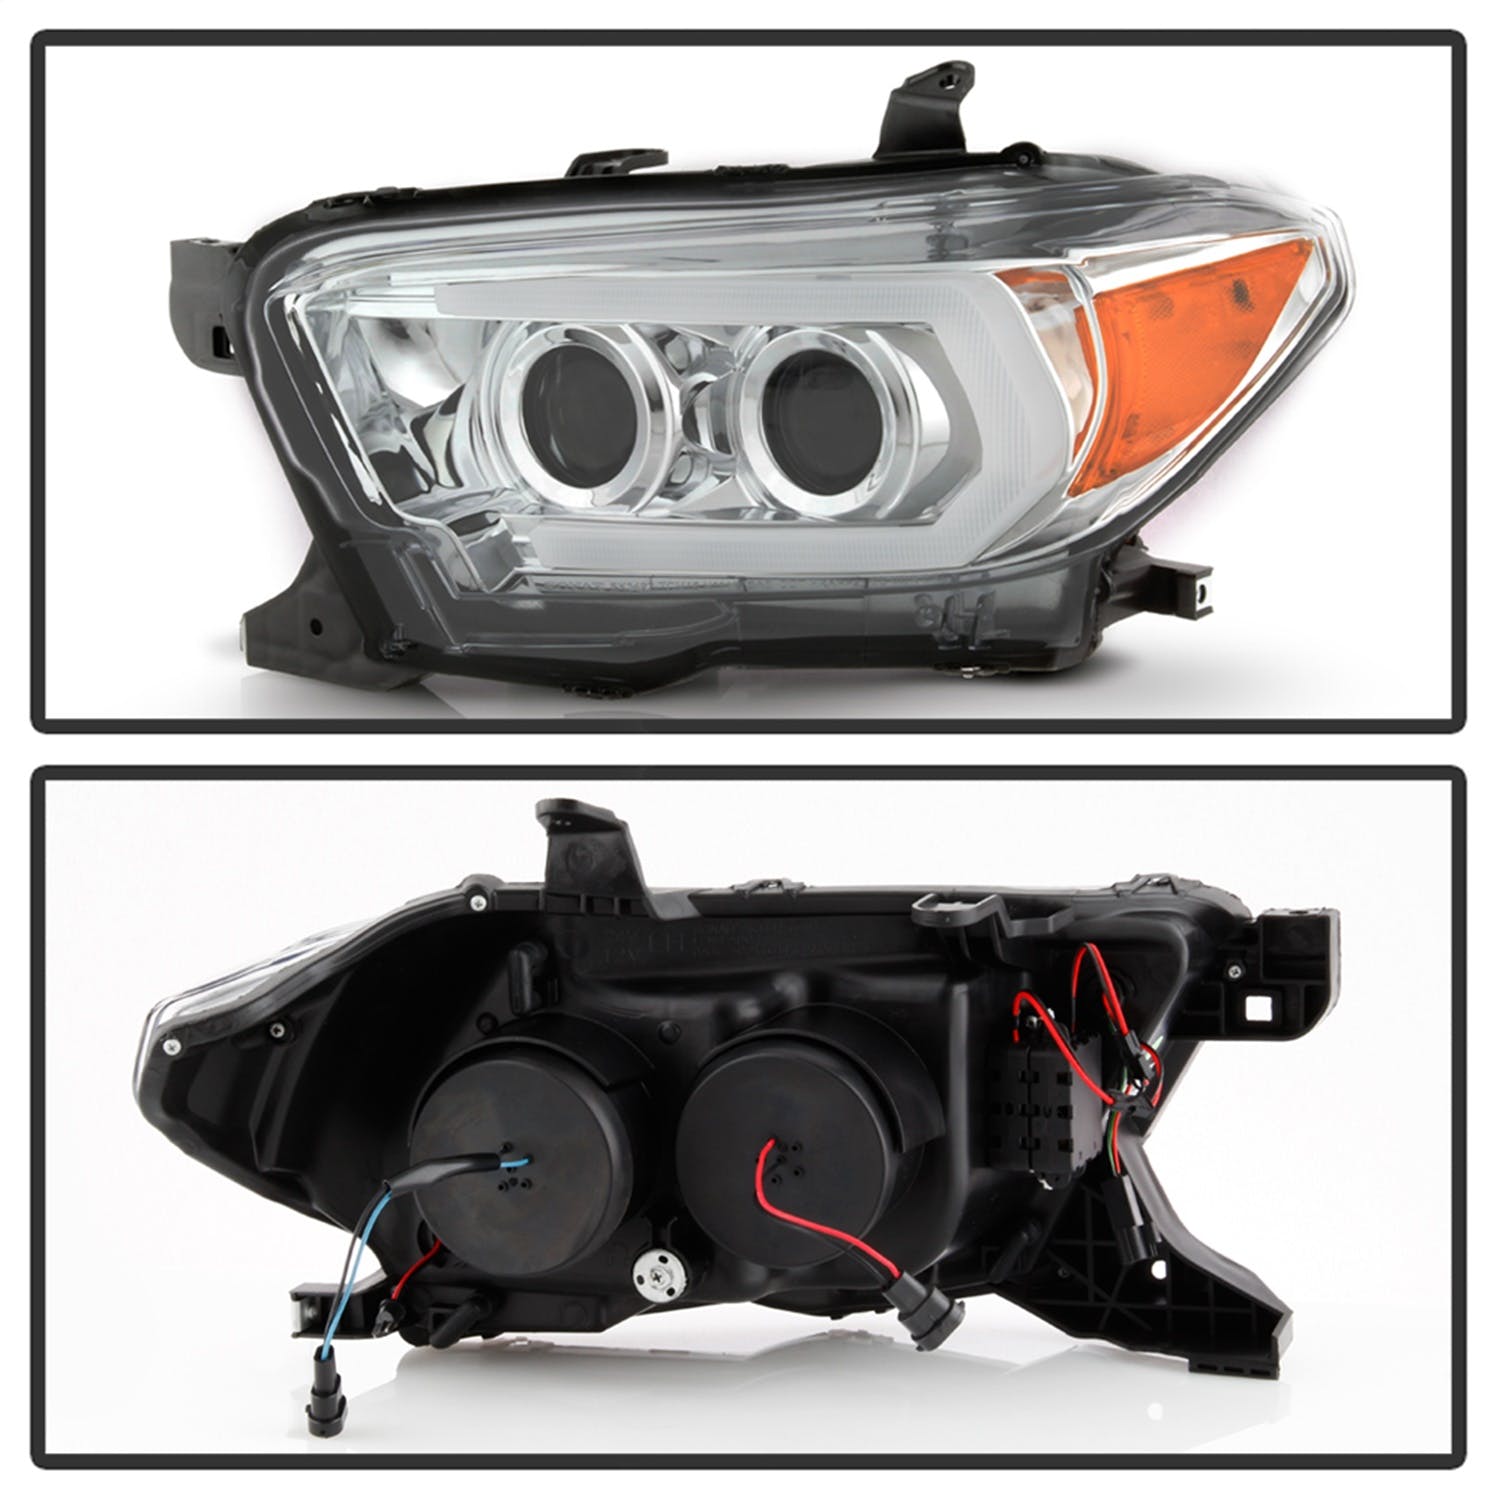 Spyder Auto 5085825 Projector Headlights